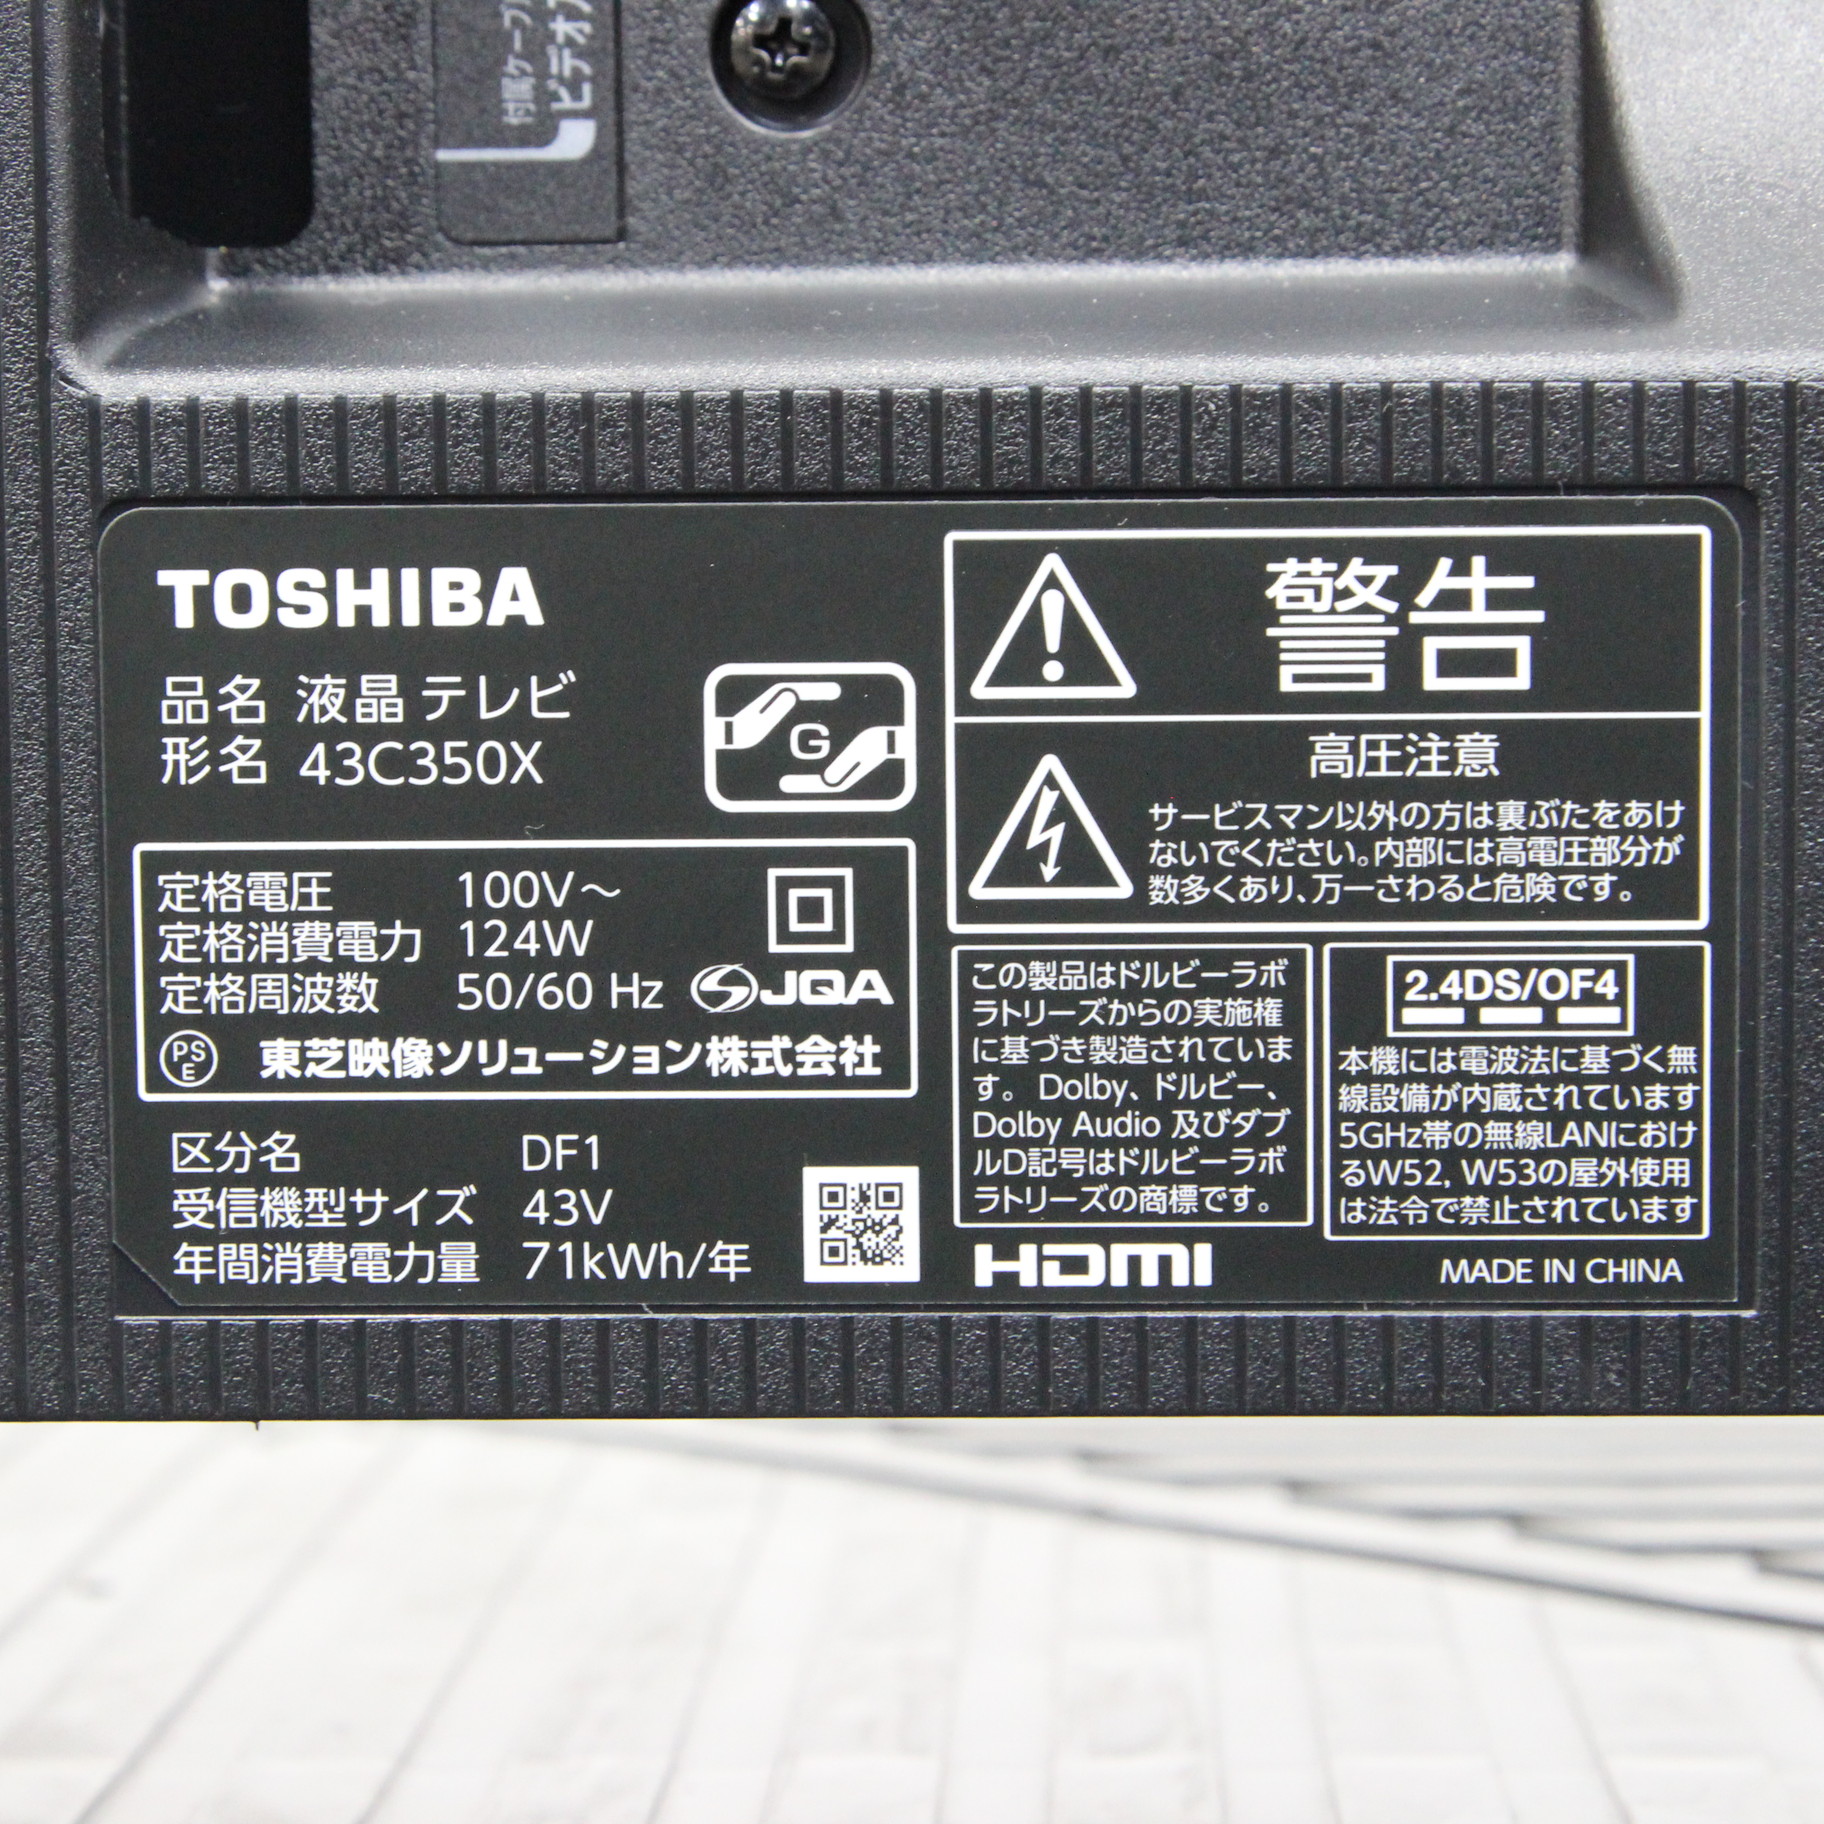 TOSHIBA 43C350X BLACK 新品未使用 東芝 4K液晶テレビ-